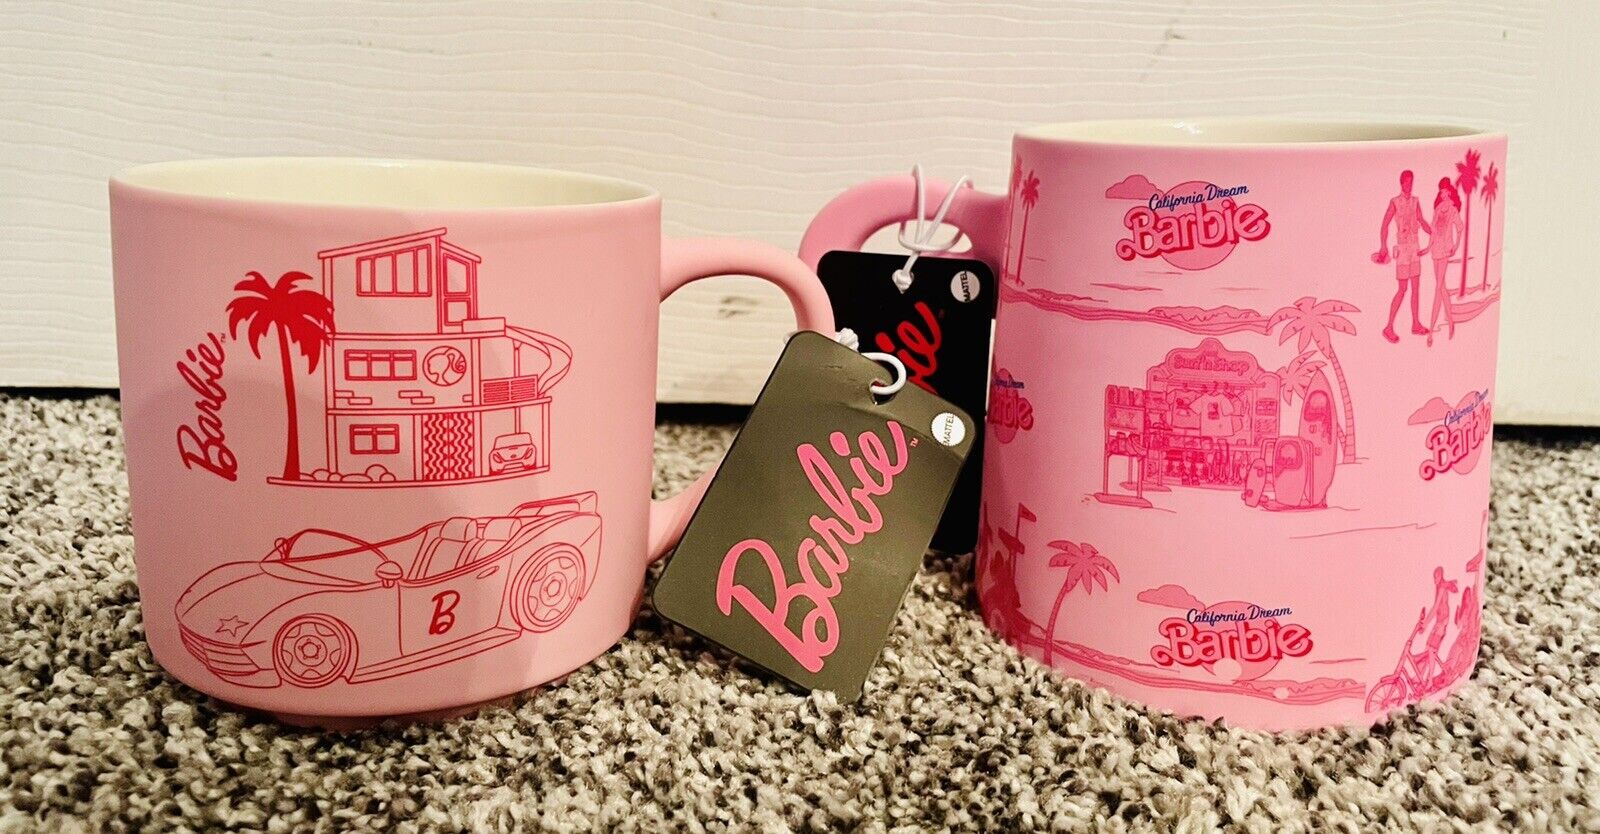 Barbie Classic Dream House & California Dream 80’s Vintage Pink Mug Set Mattel